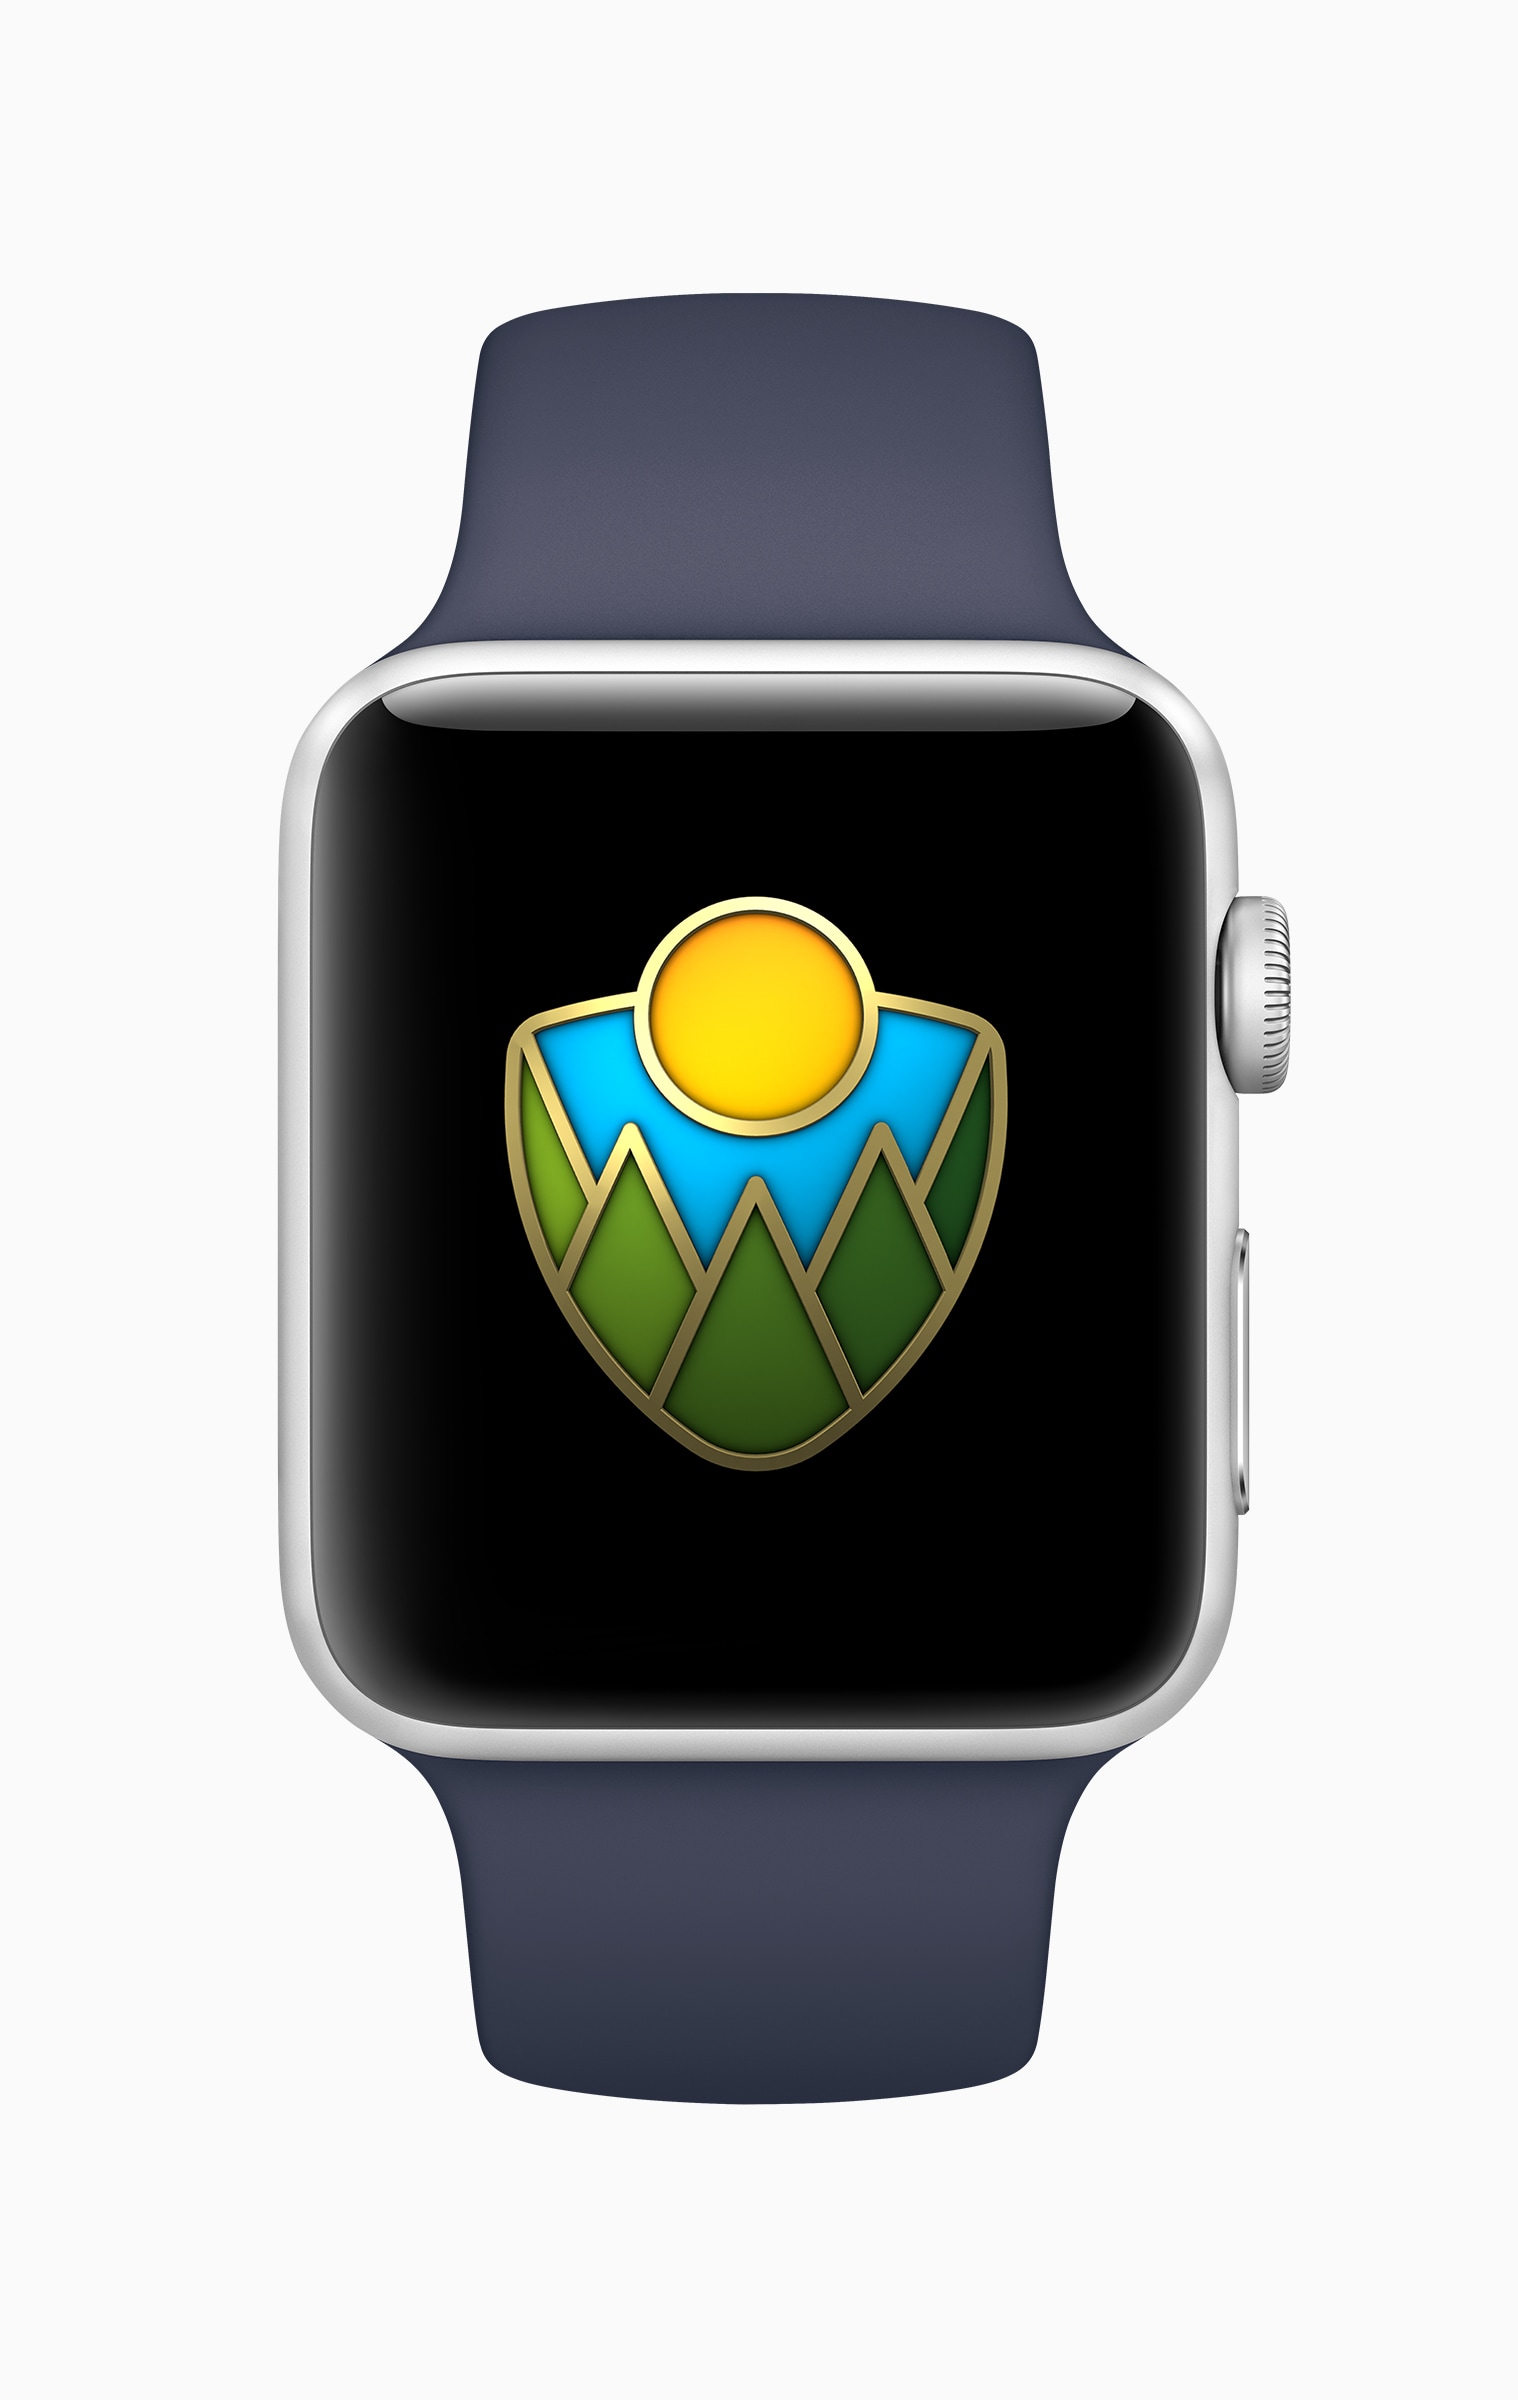 Desafio de parques do Apple Watch